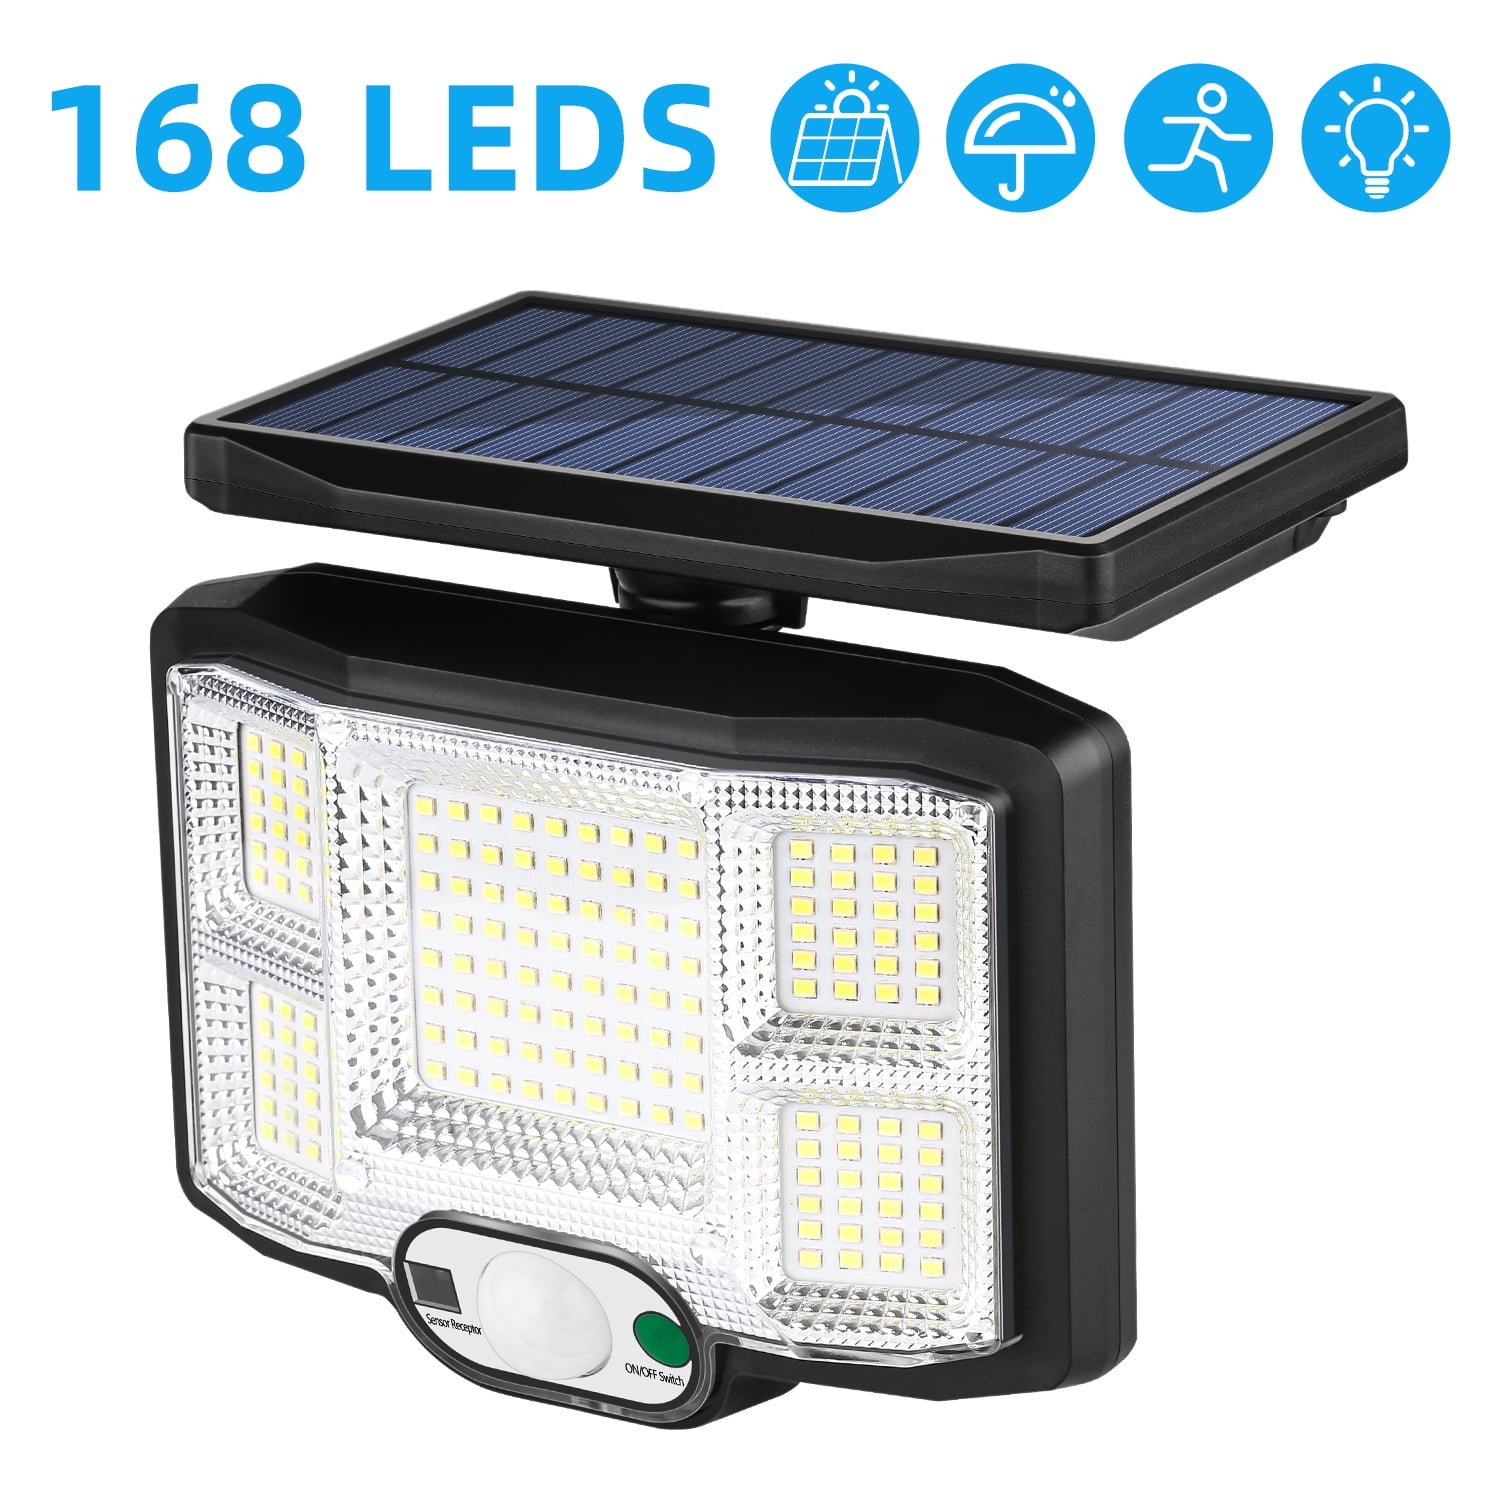 Litom Solar Powered Lights Outdoor 54 LED Super Bright Wide Angle LTCD020AB EBIZ 